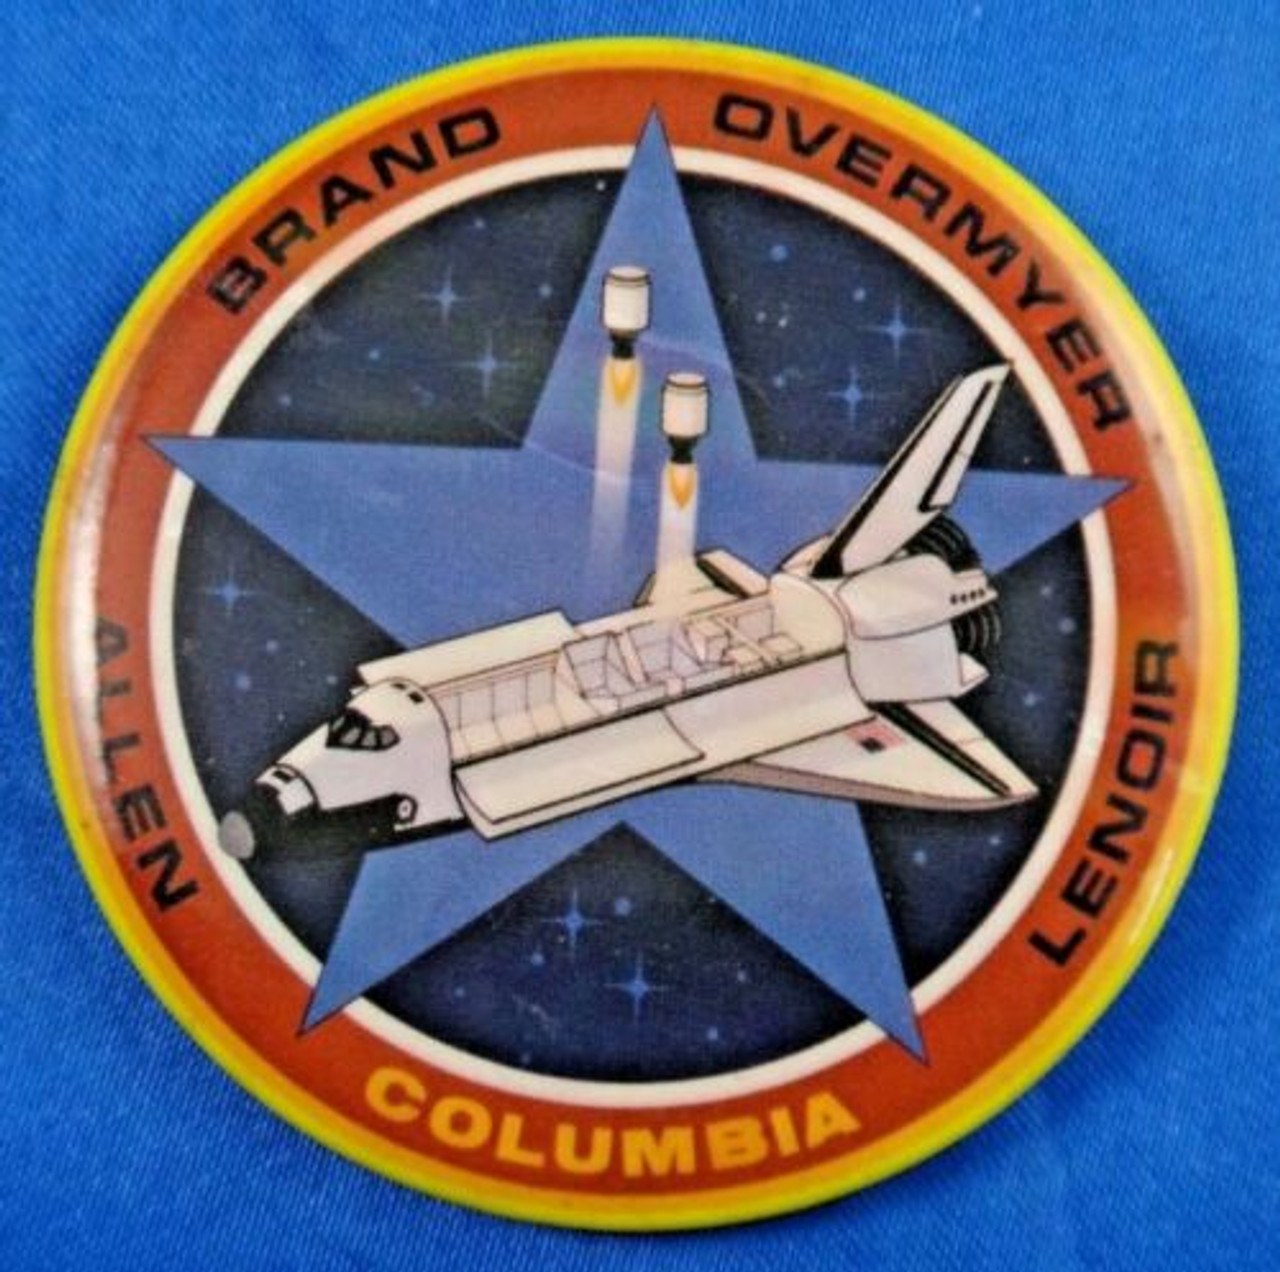 space shuttle program coin